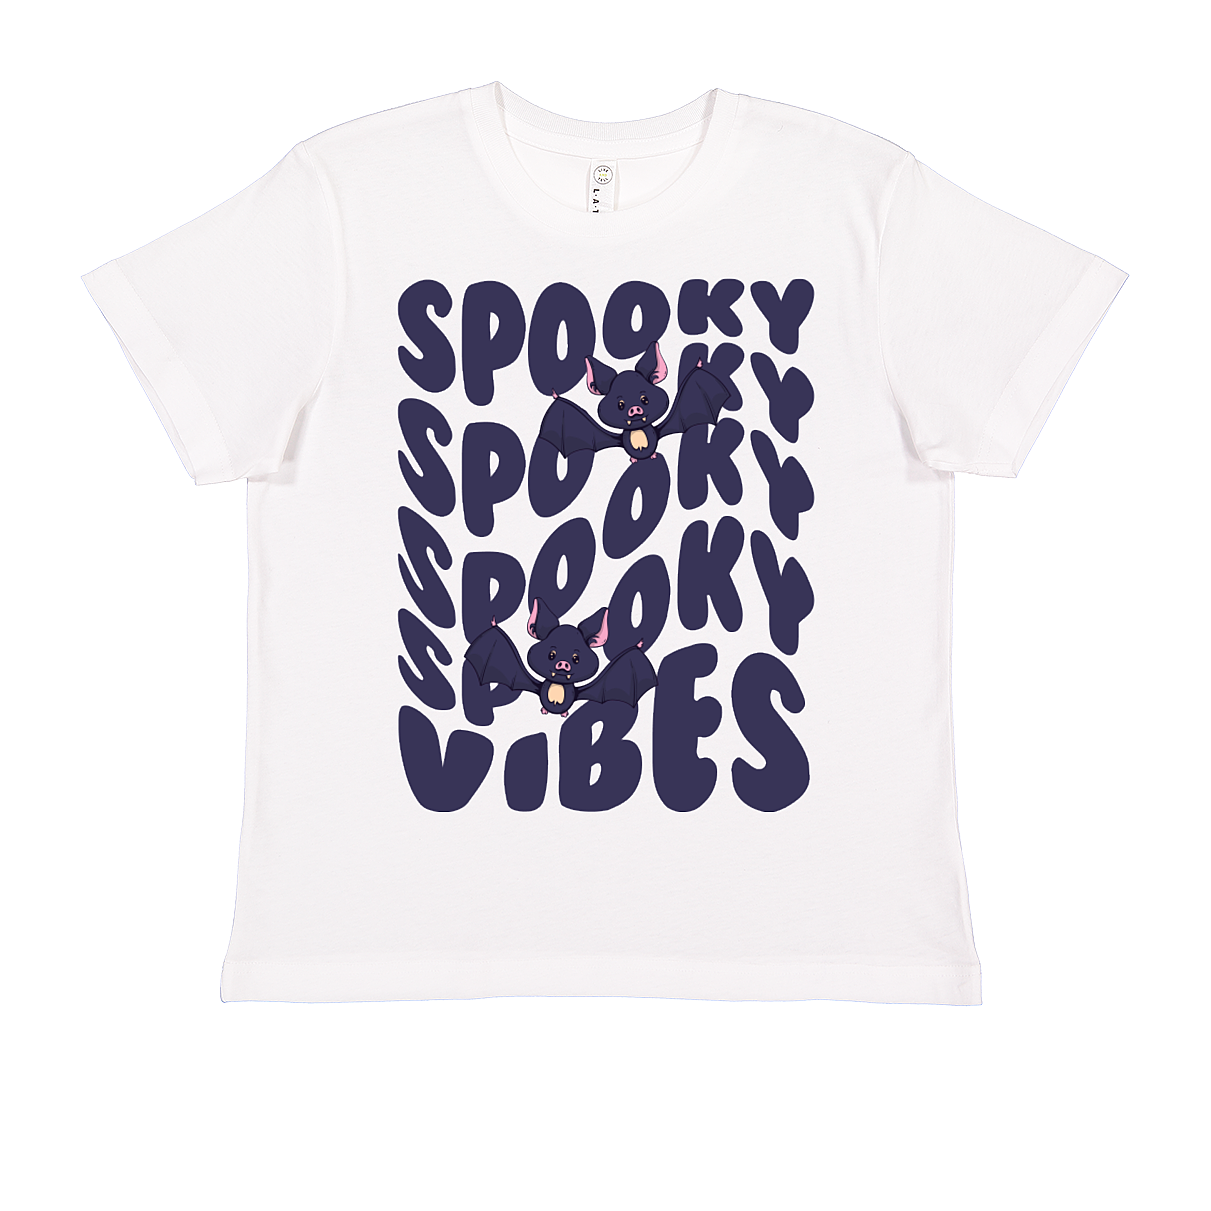 Spooky Vibes Kids T-Shirt